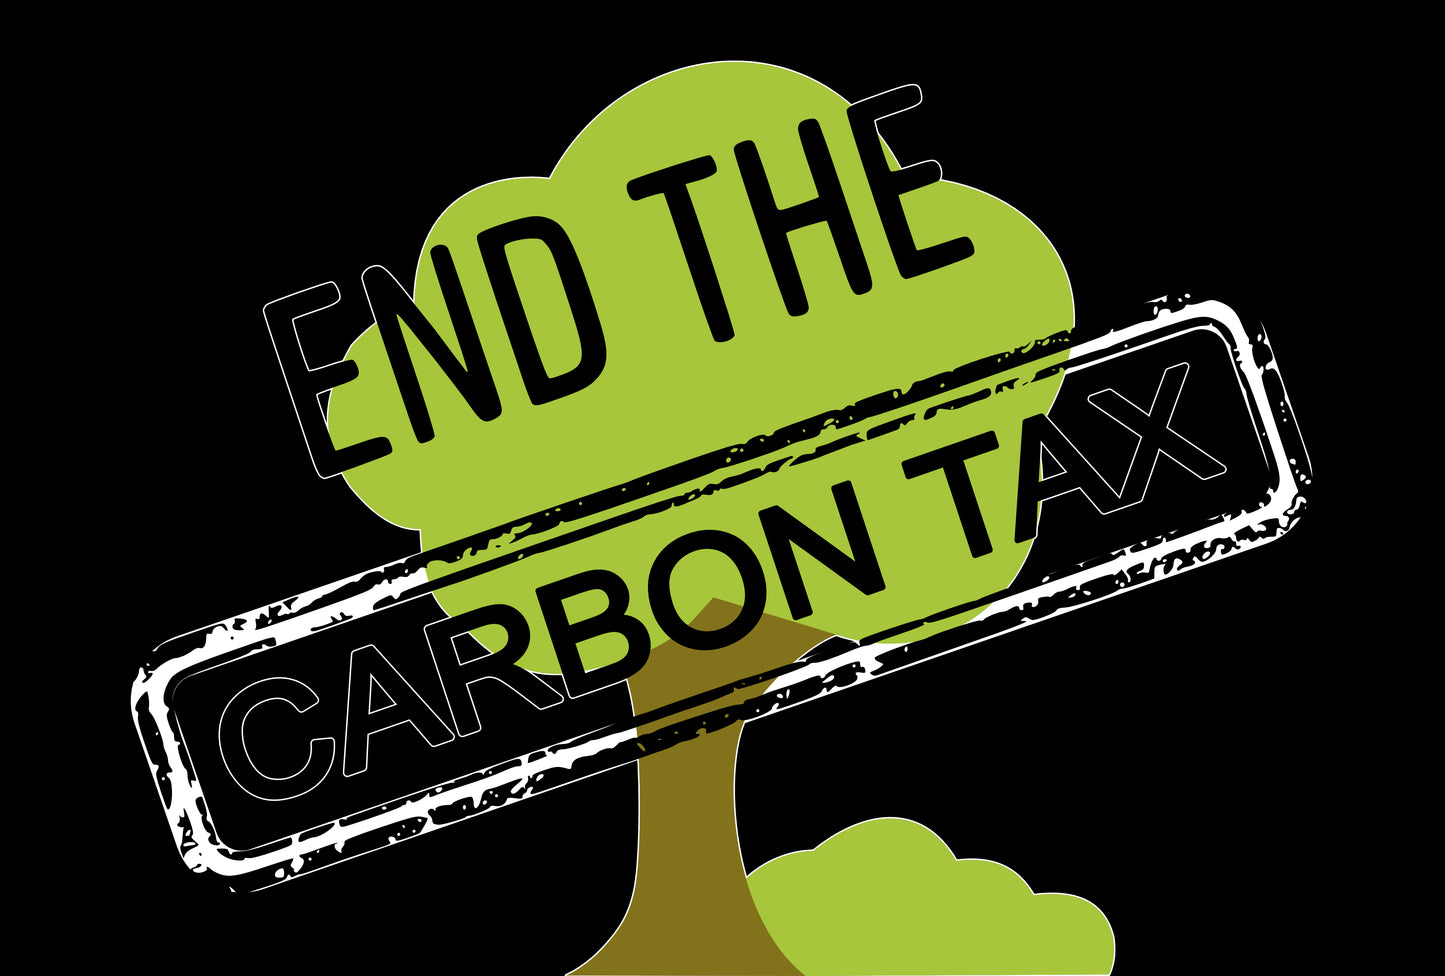 Carbon Tax Custom Artwork